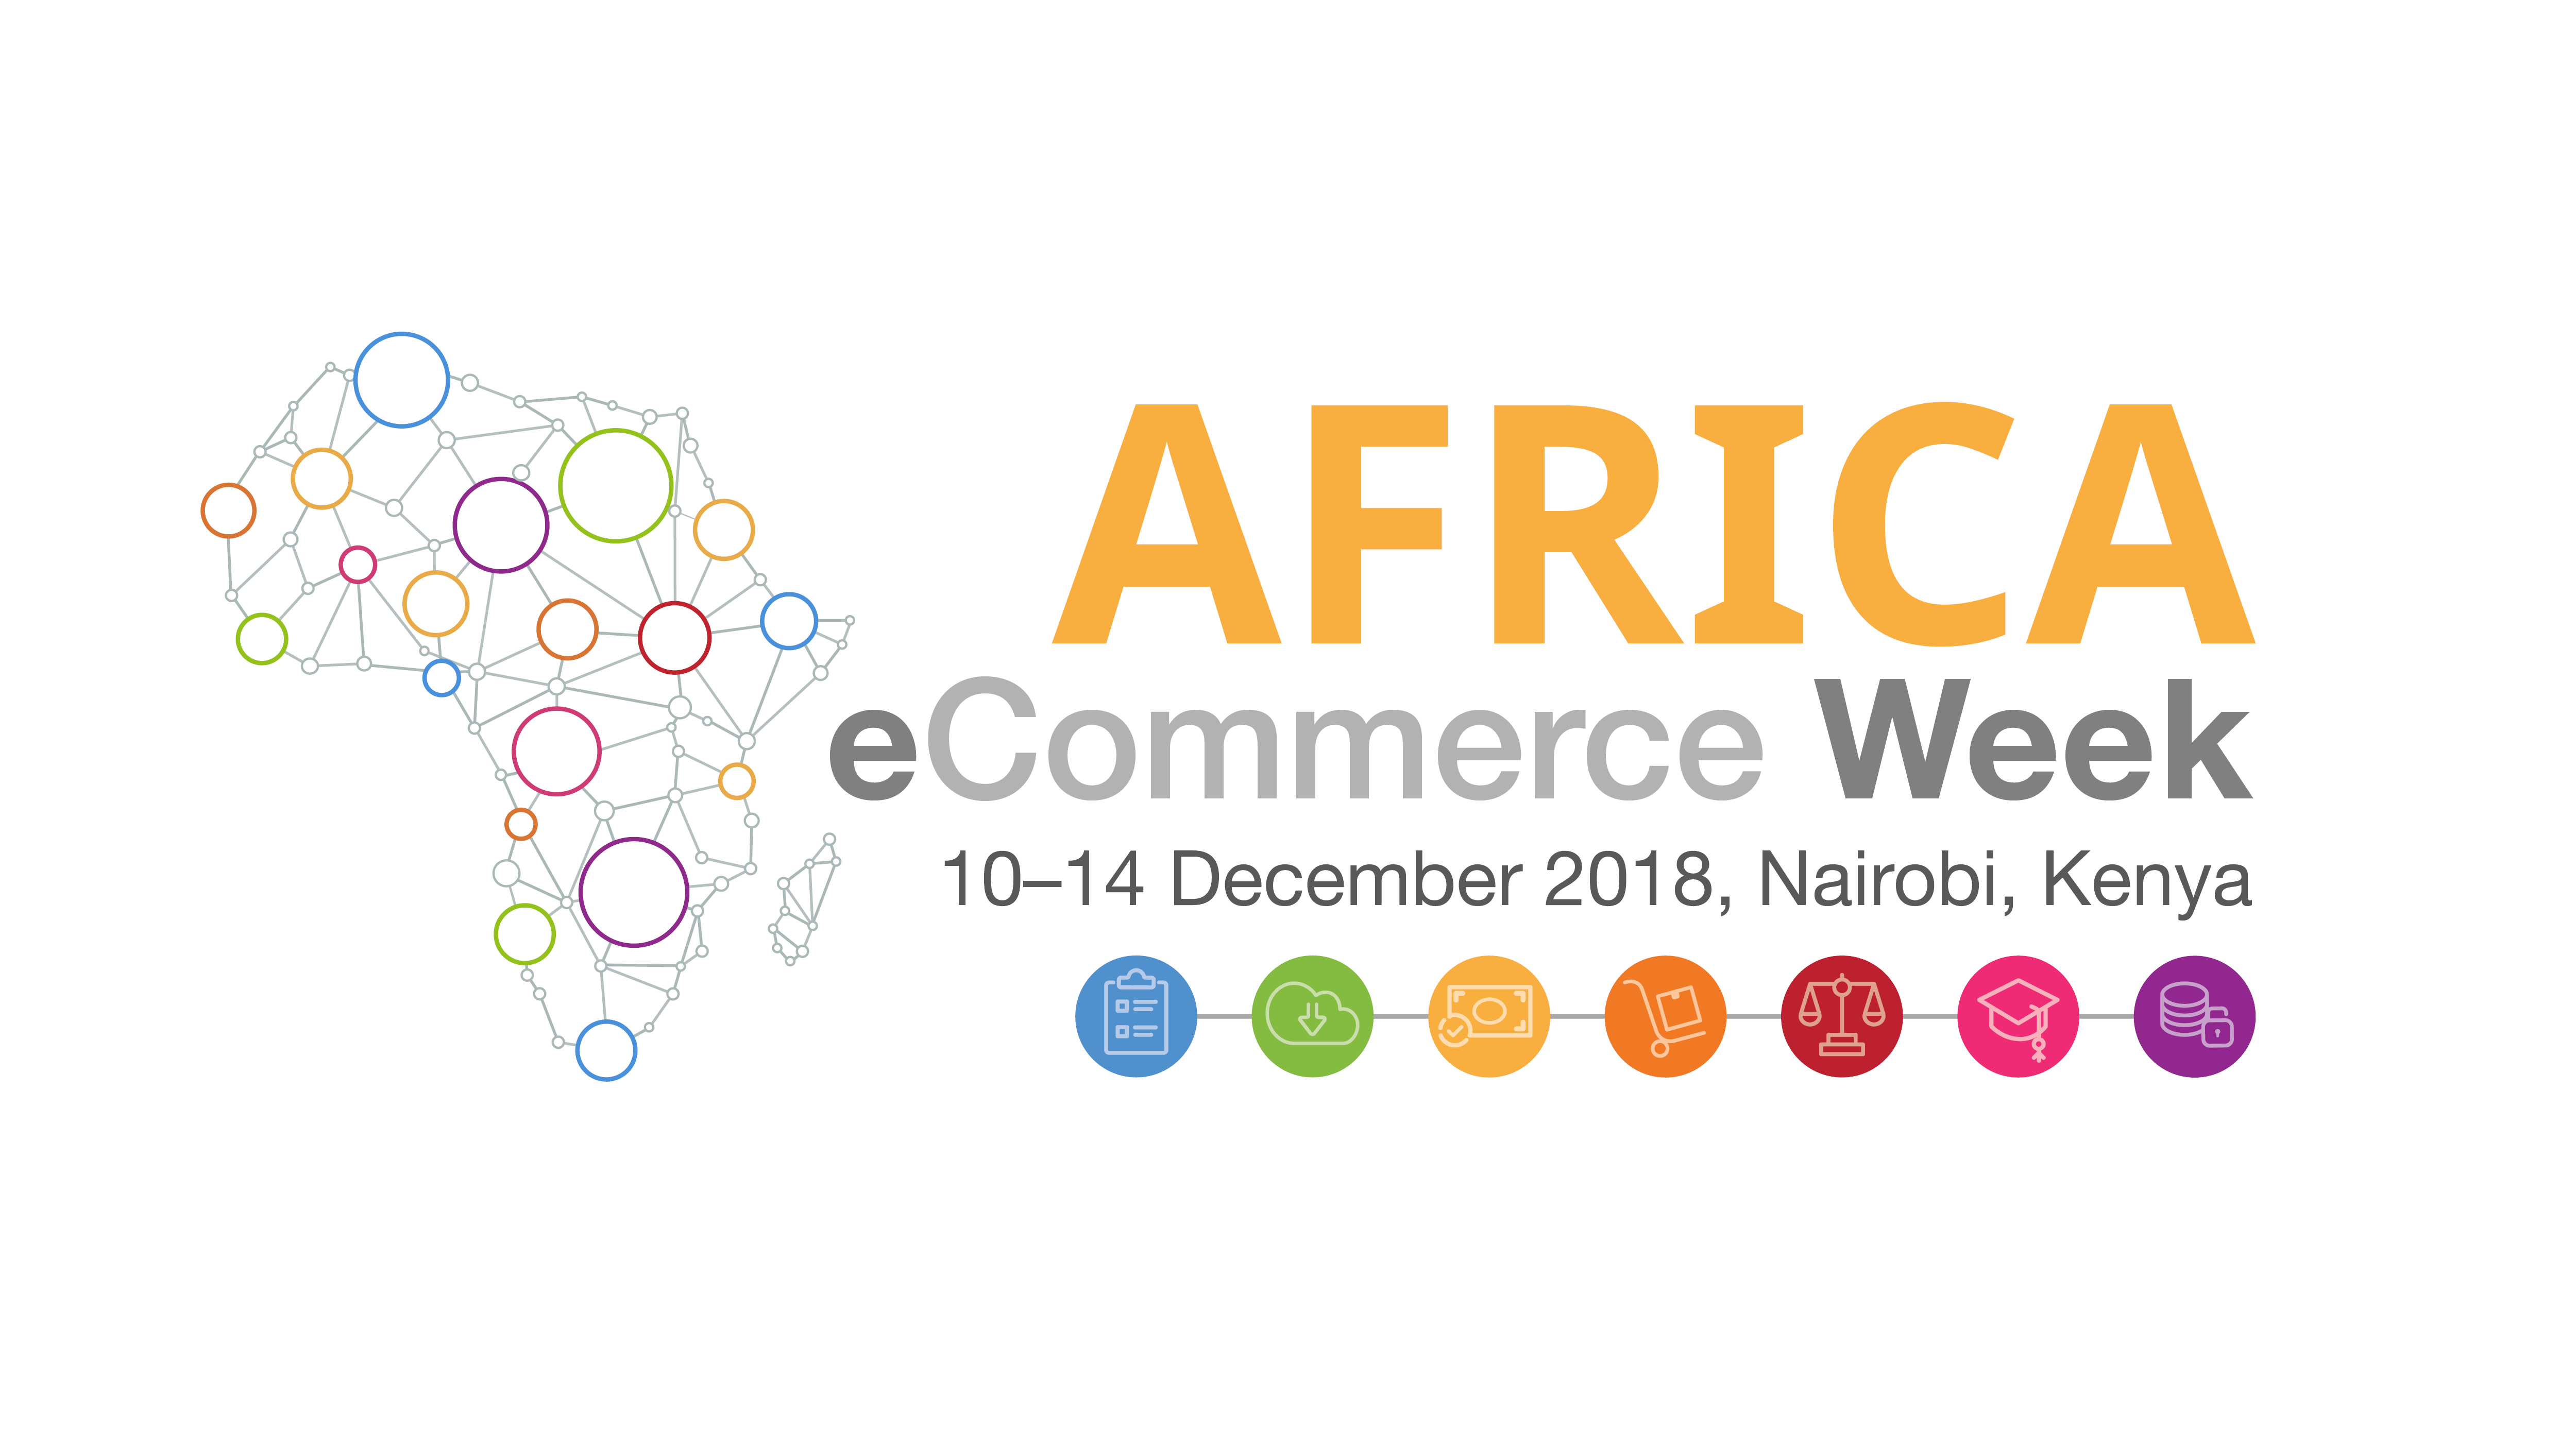 Africa eCommerce Week: Empowering African Economies in the Digital Era